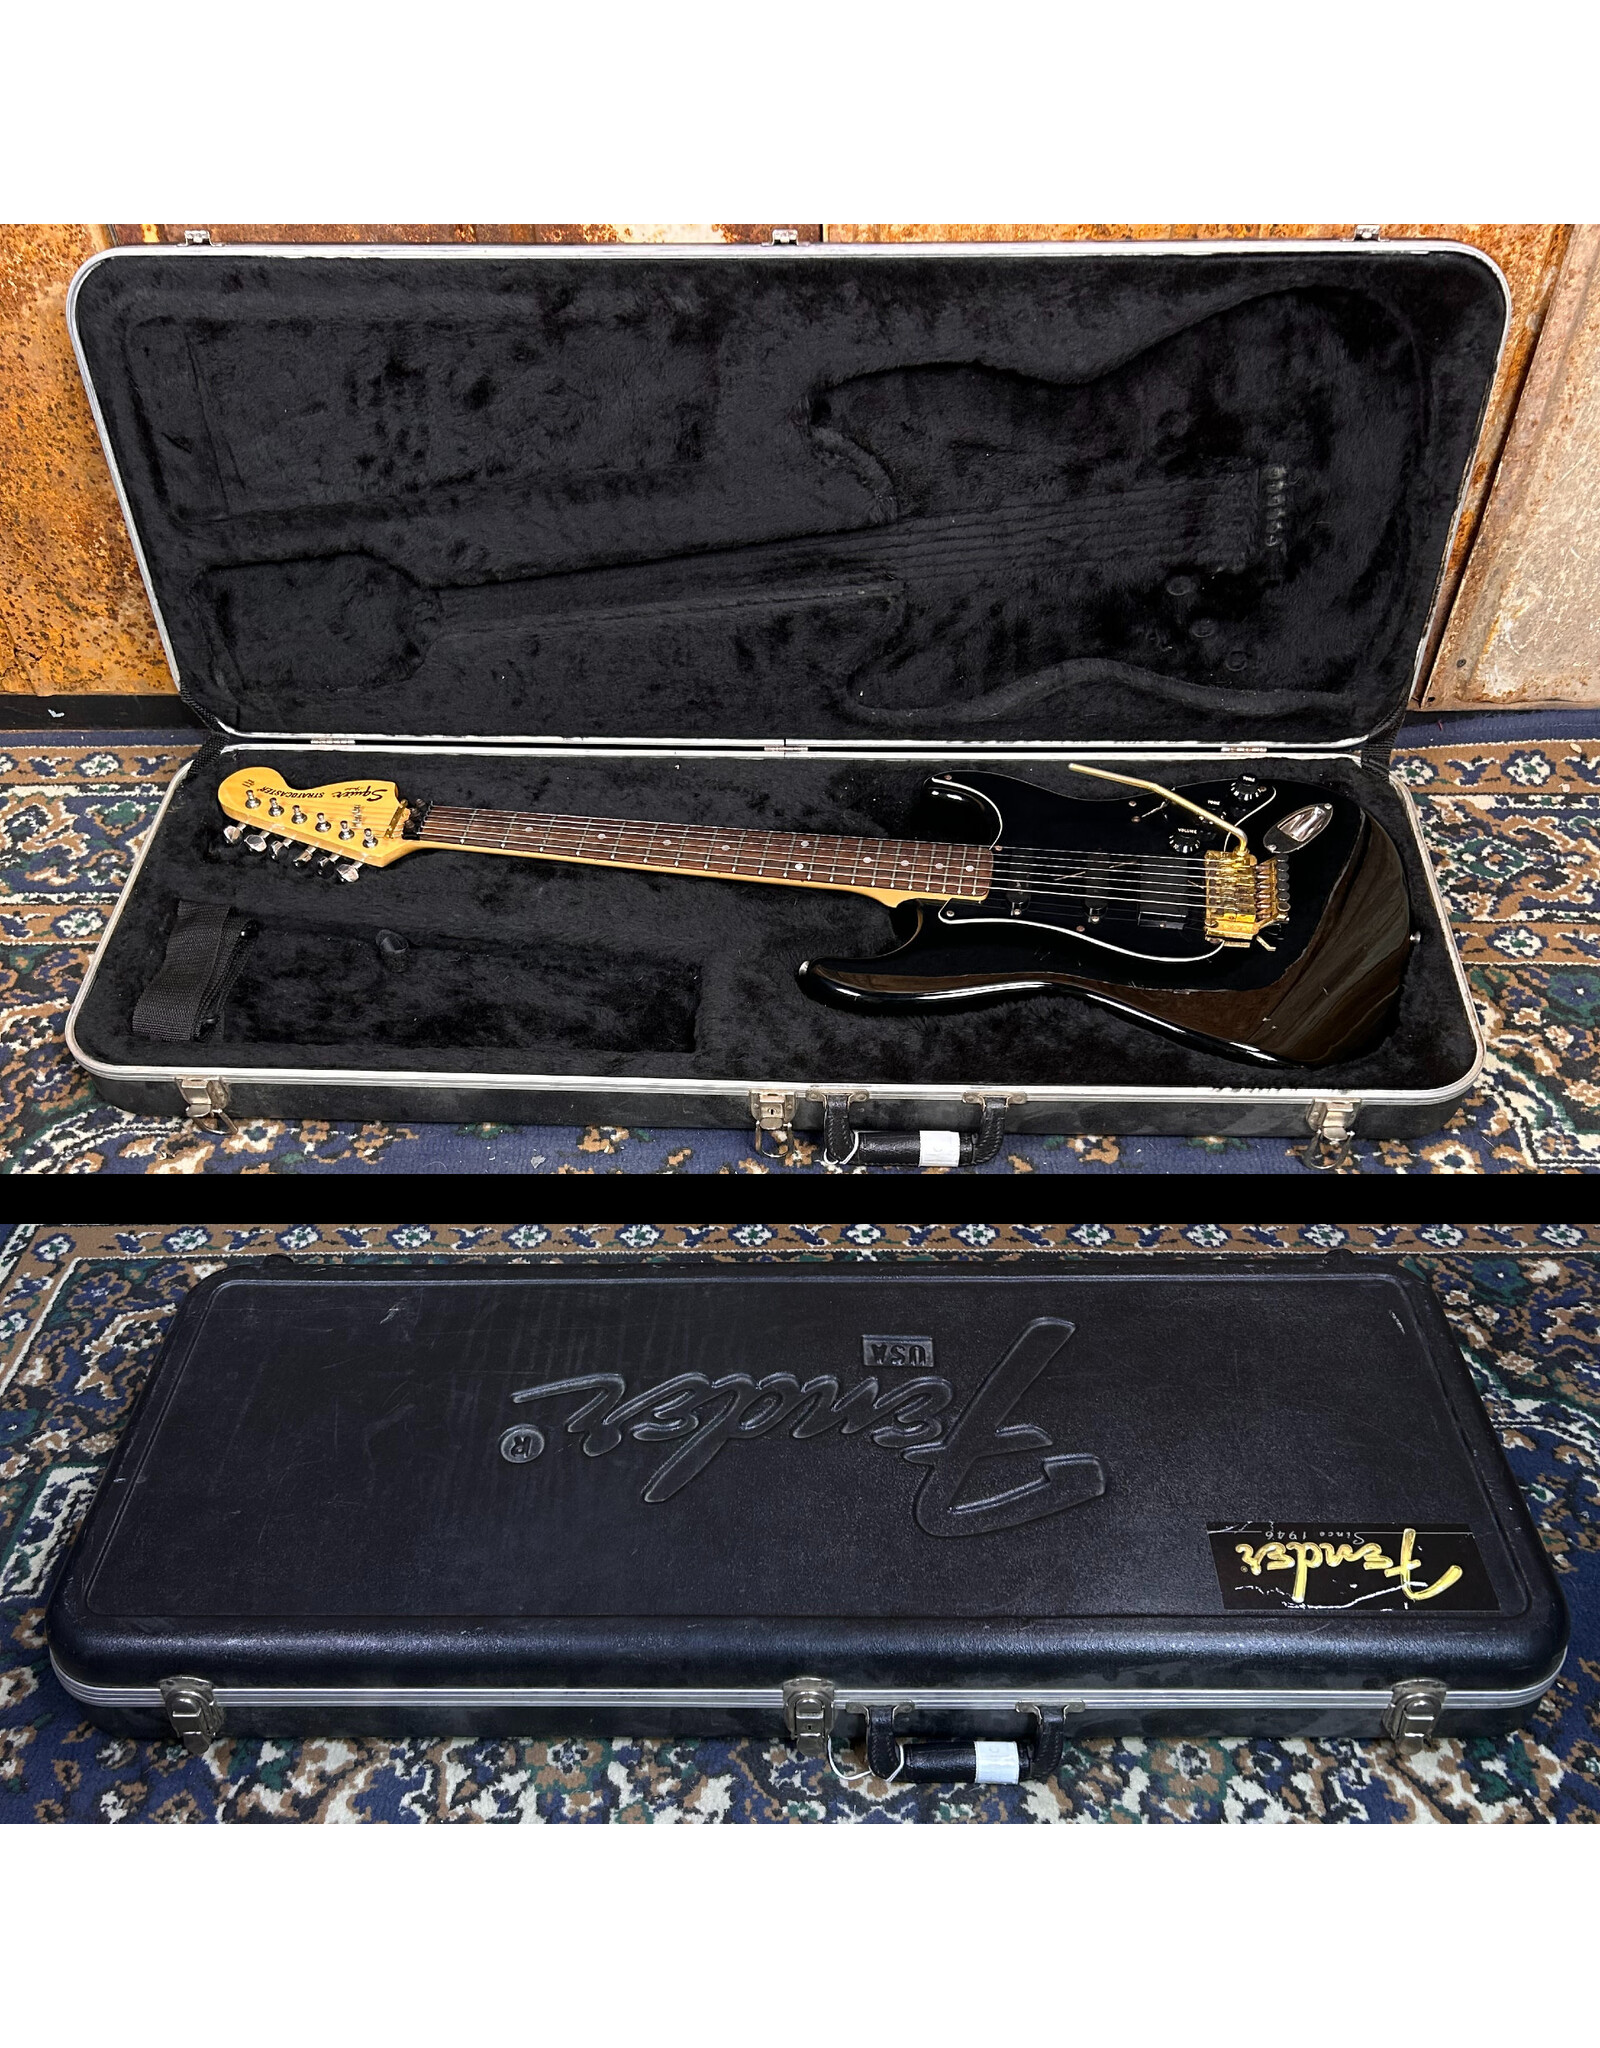 Fender Fender Squier Stratocaster Made in Japan SQ Series 1983-84 Schaller Tremolo Black (Used)